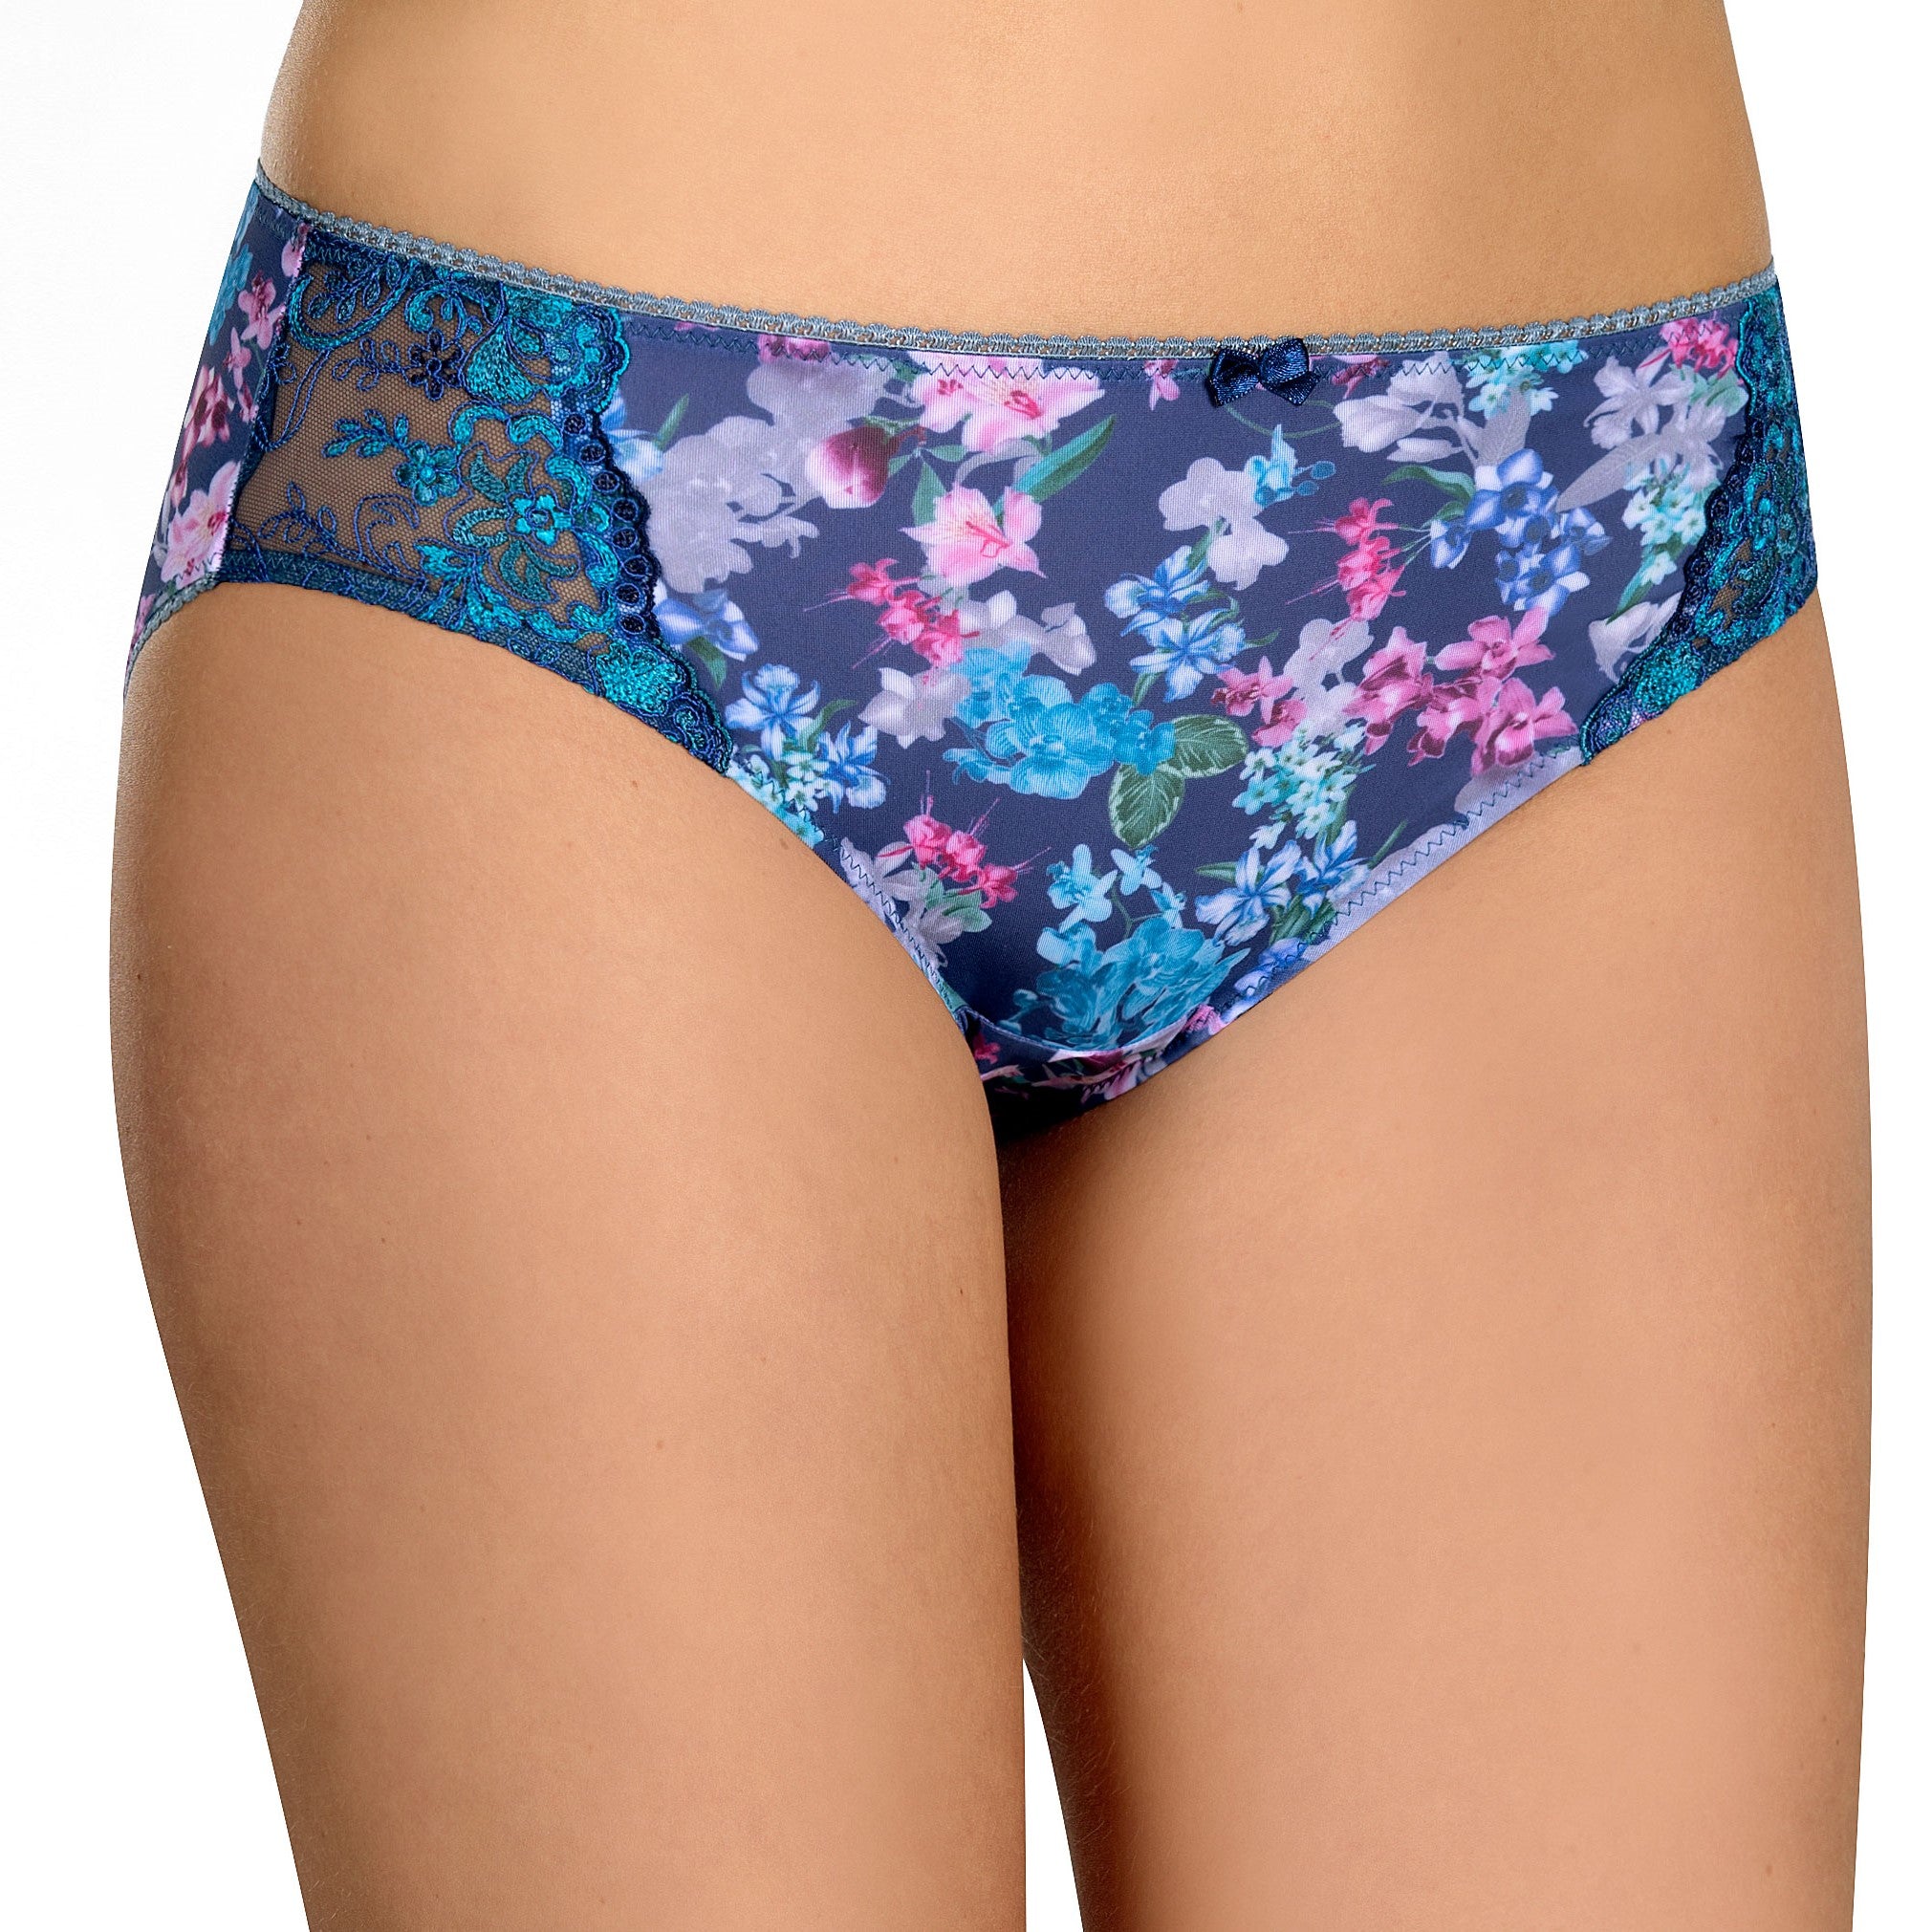 Blue women's cartoon panties with a cute flower print. Trendy